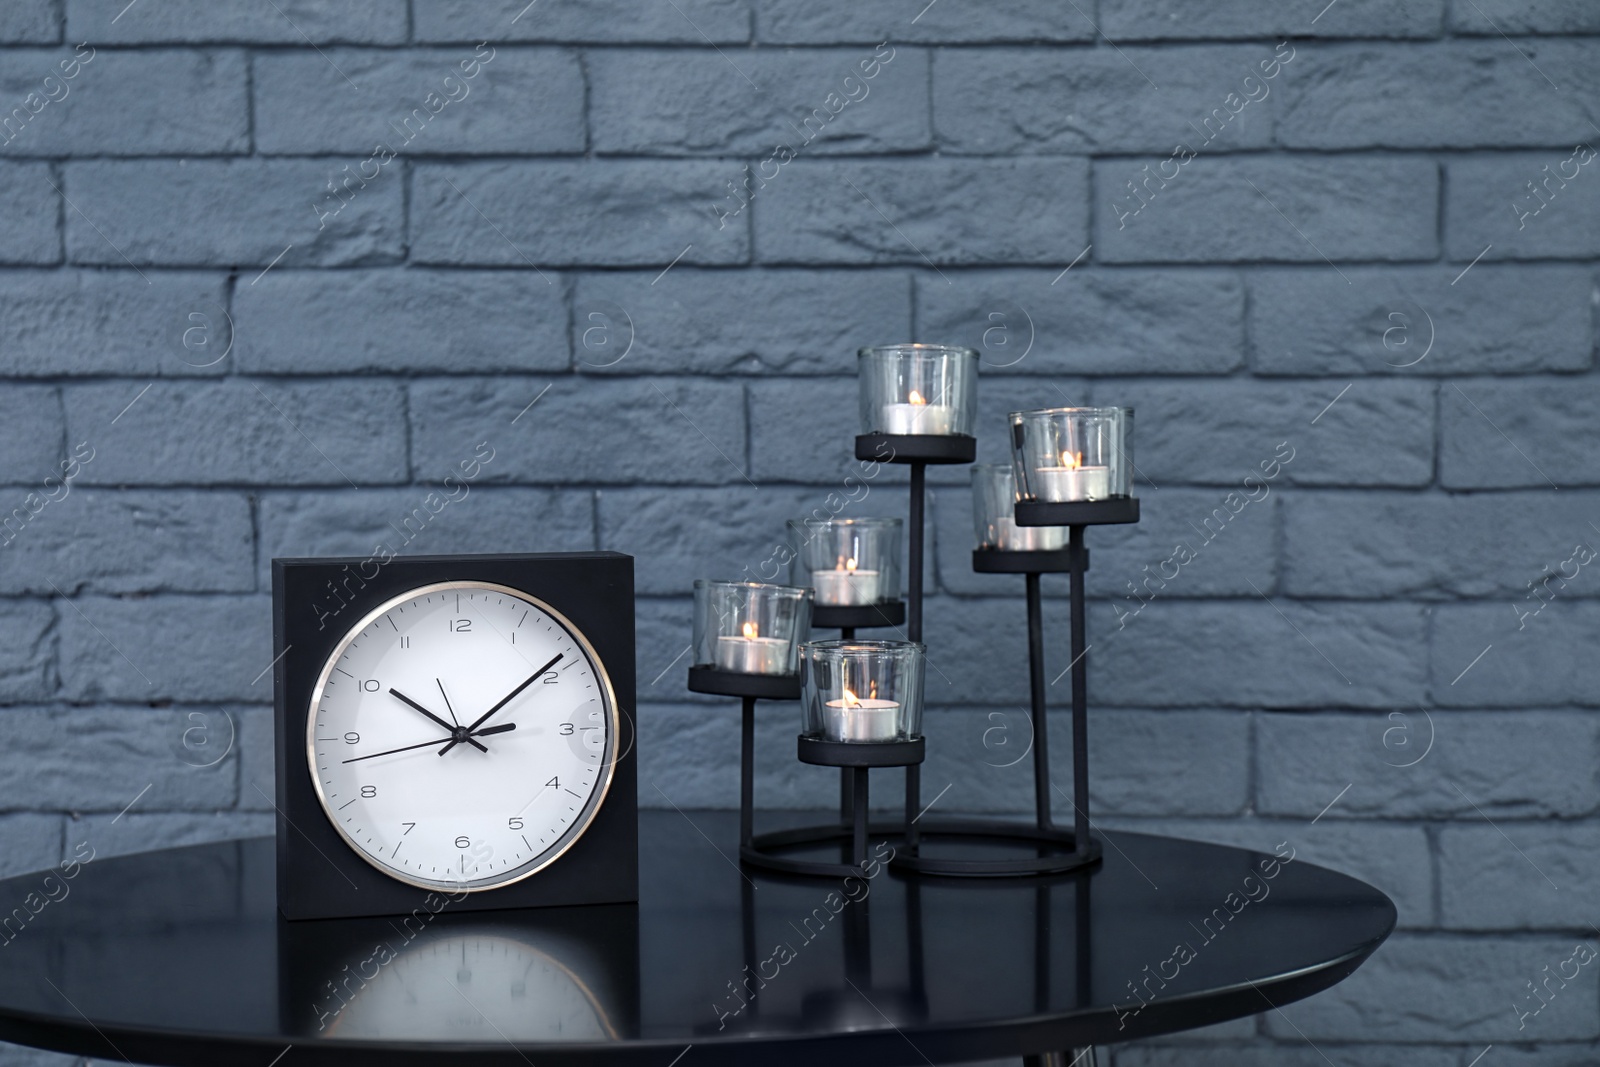 Photo of Stylish analog clock and candles on table near brick wall